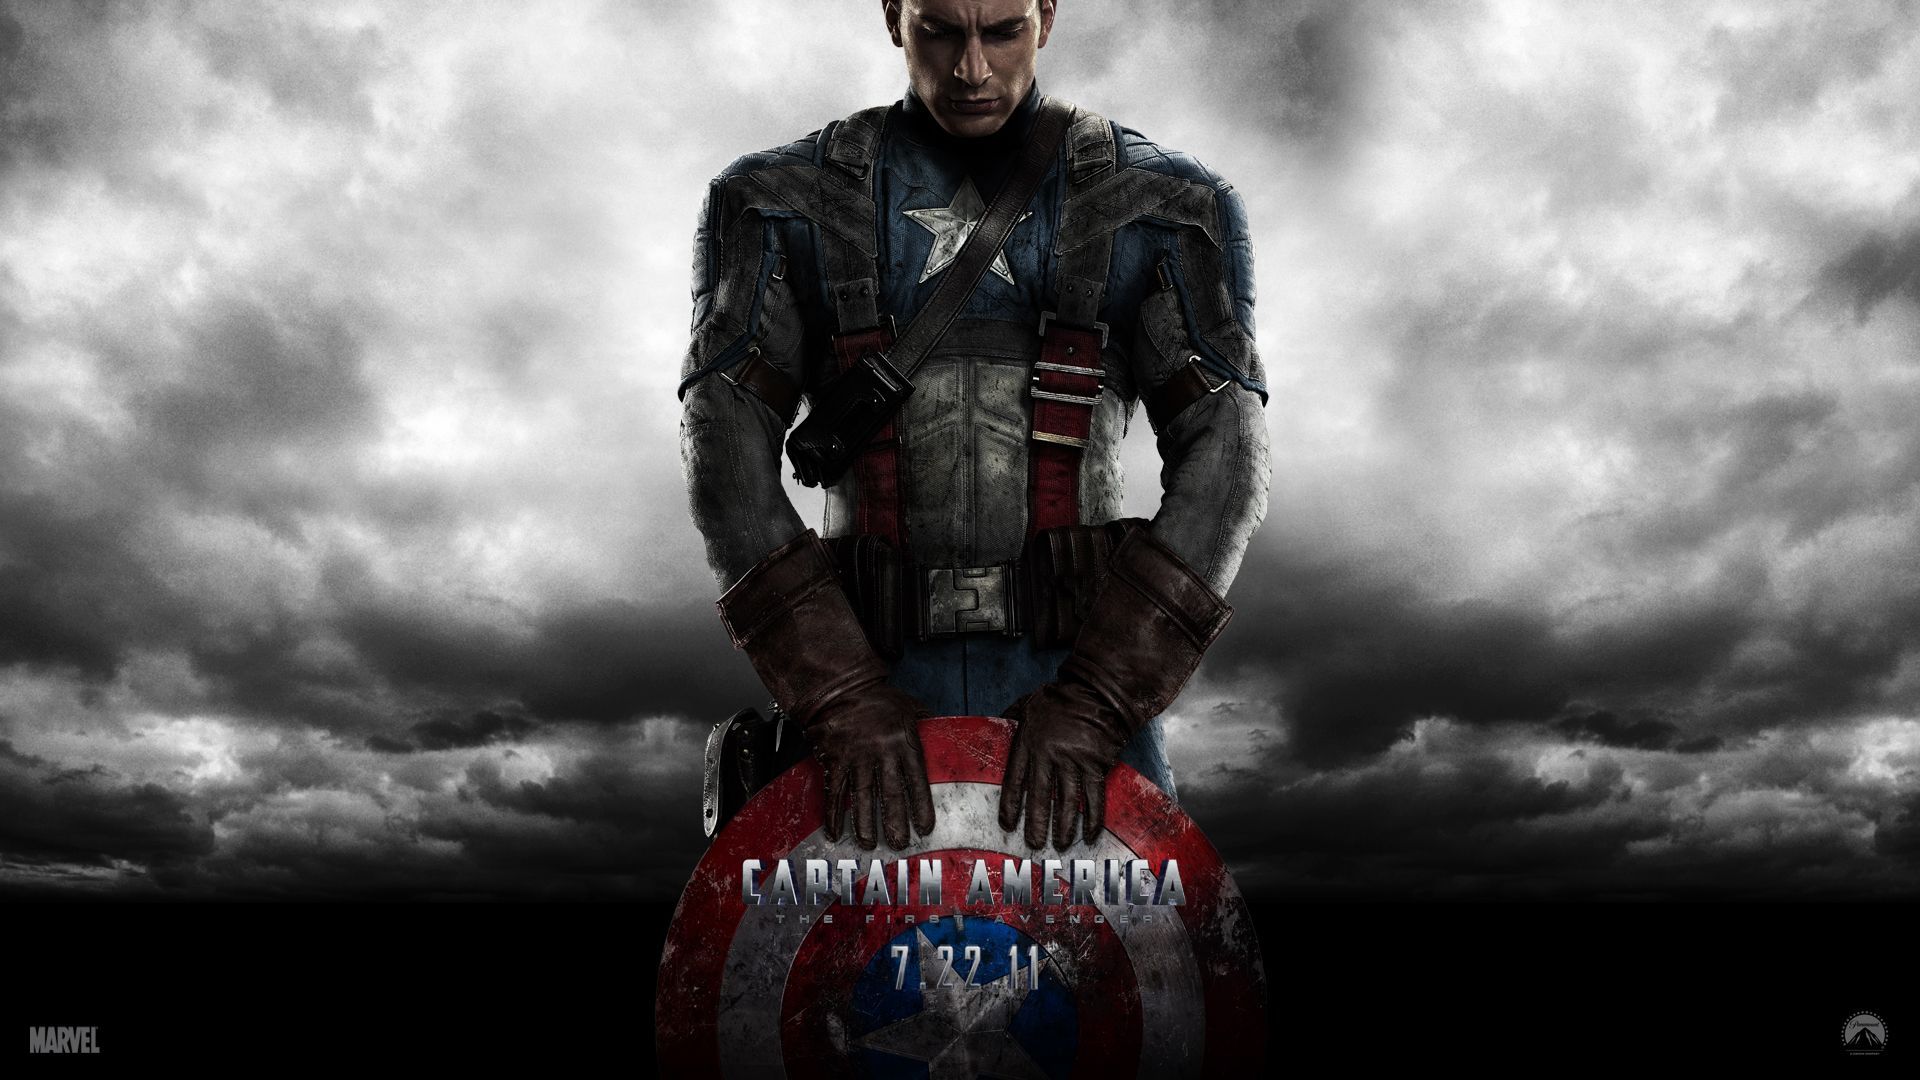 Captain America Chris Evans Wallpaper - wallpaper.